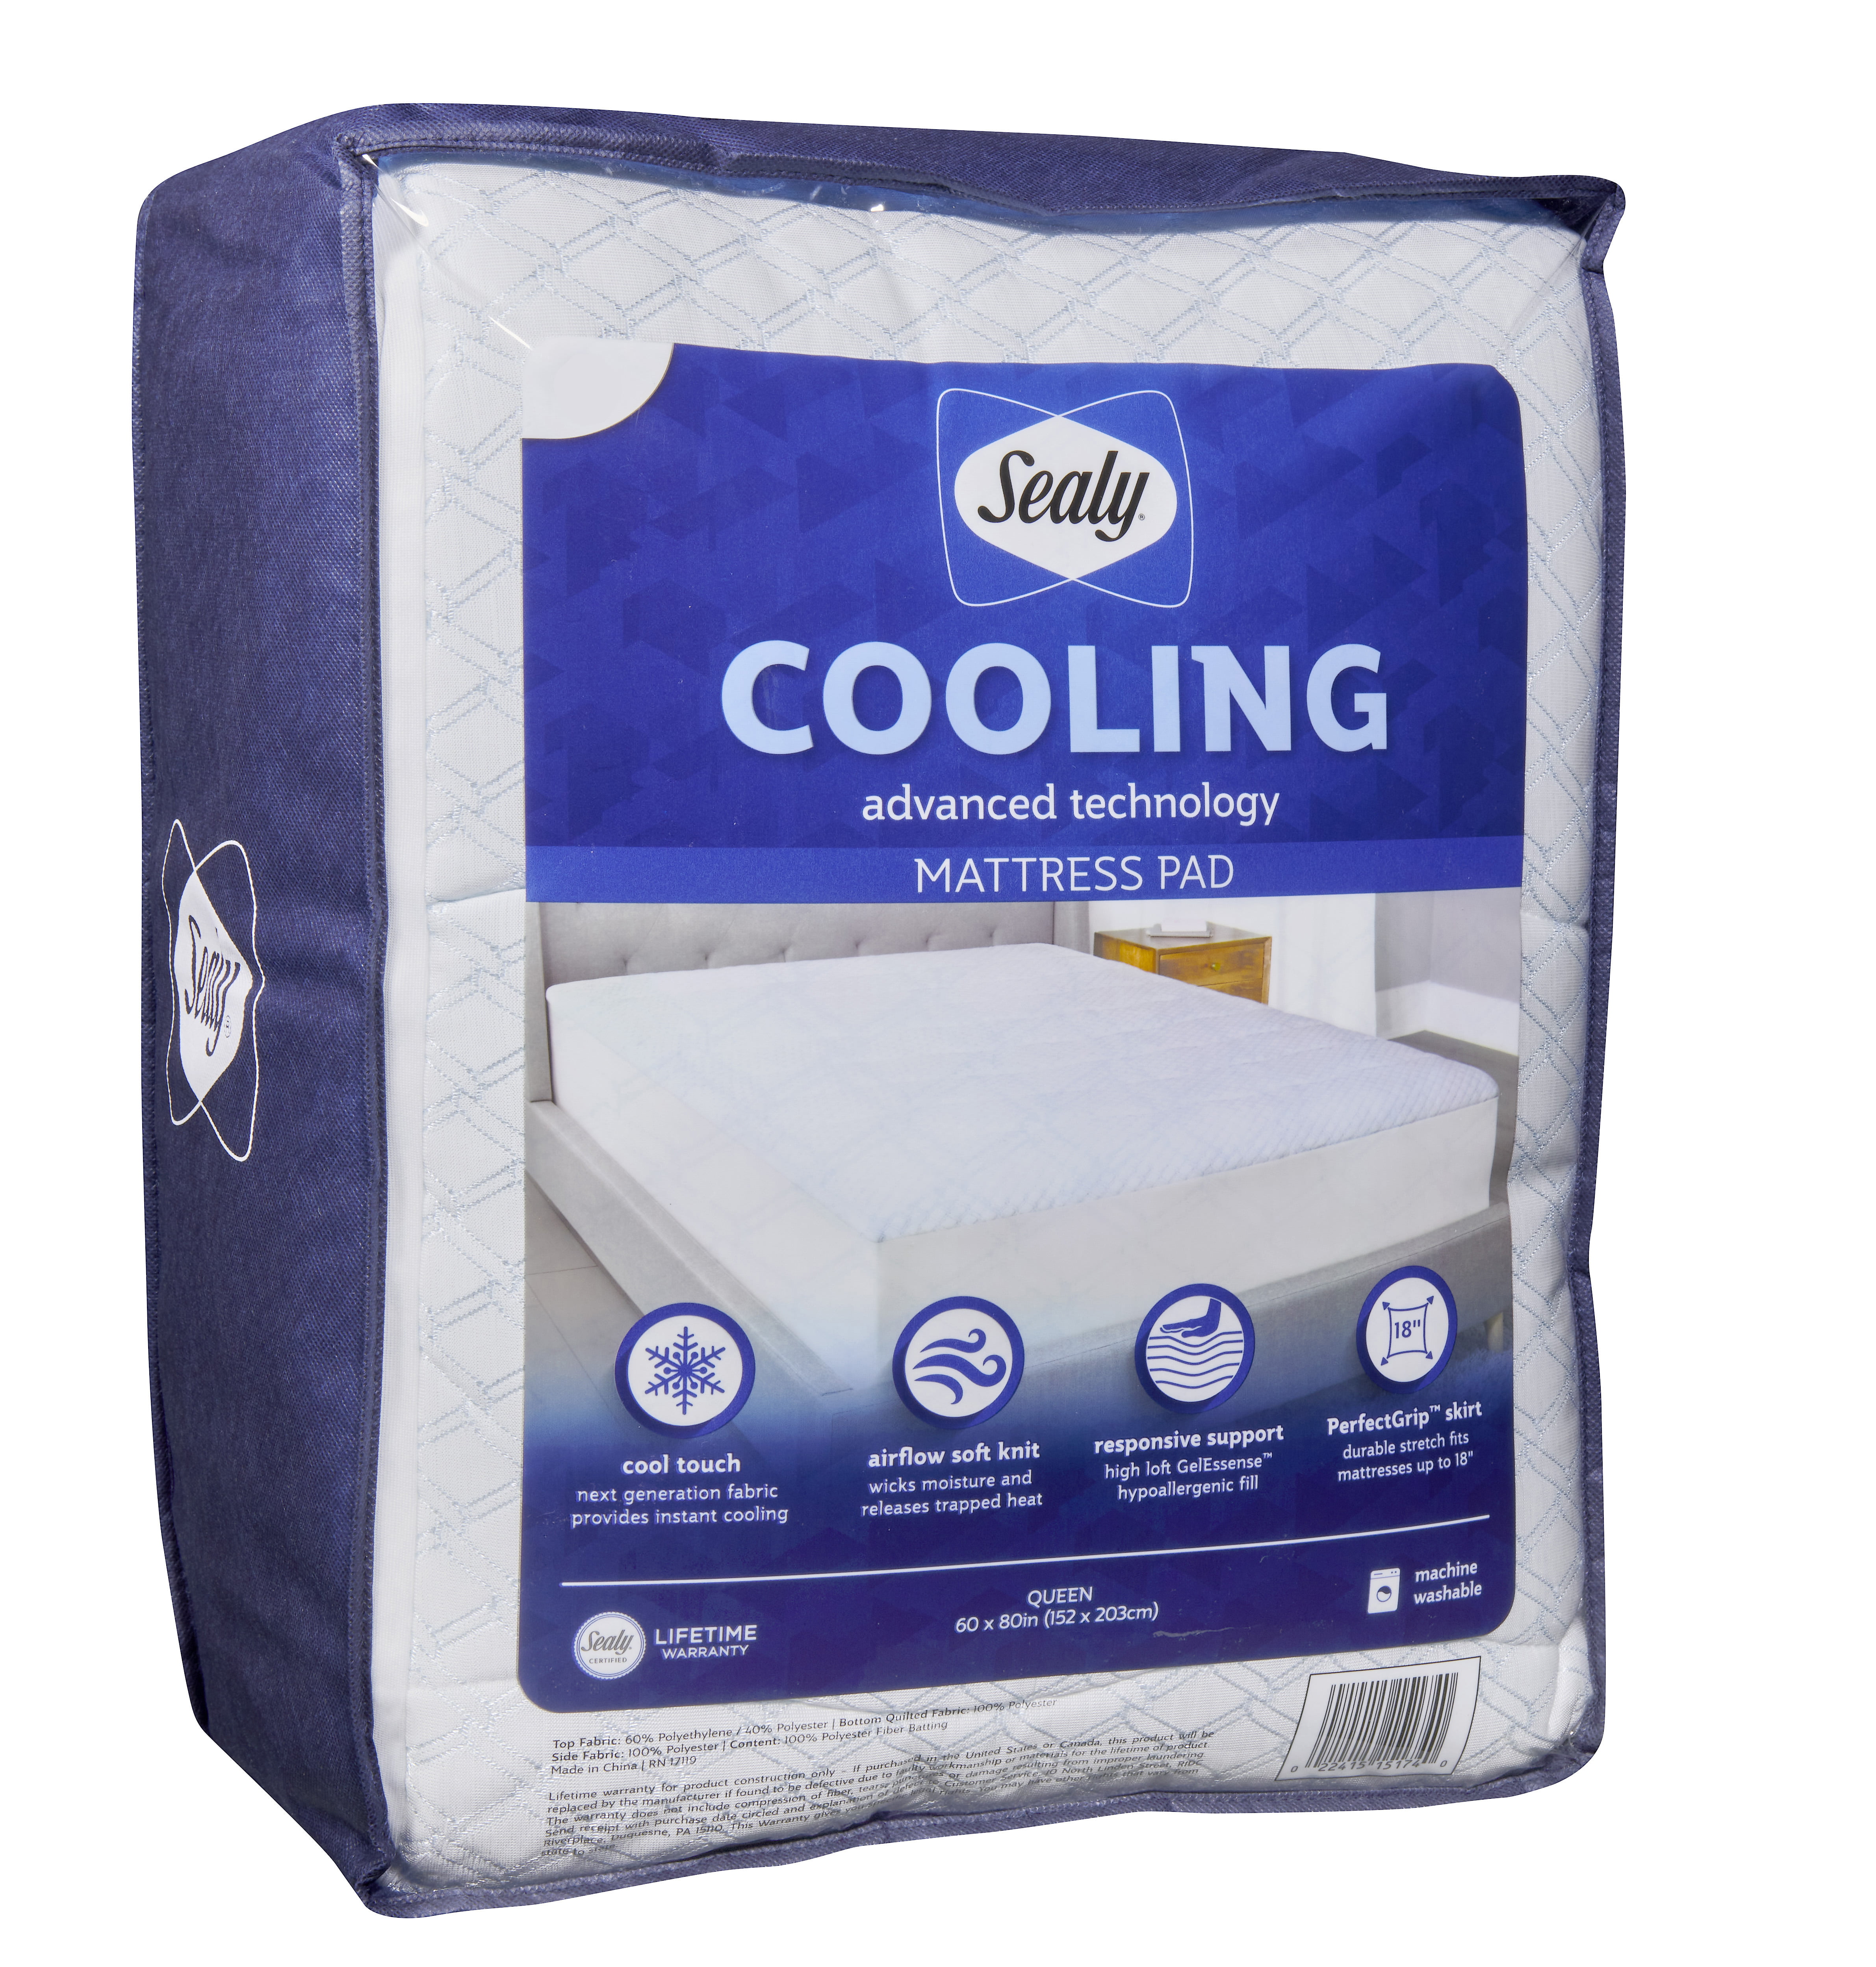 Sealy Cooling Mattress Pad, Full. a cooling mattress pad. 